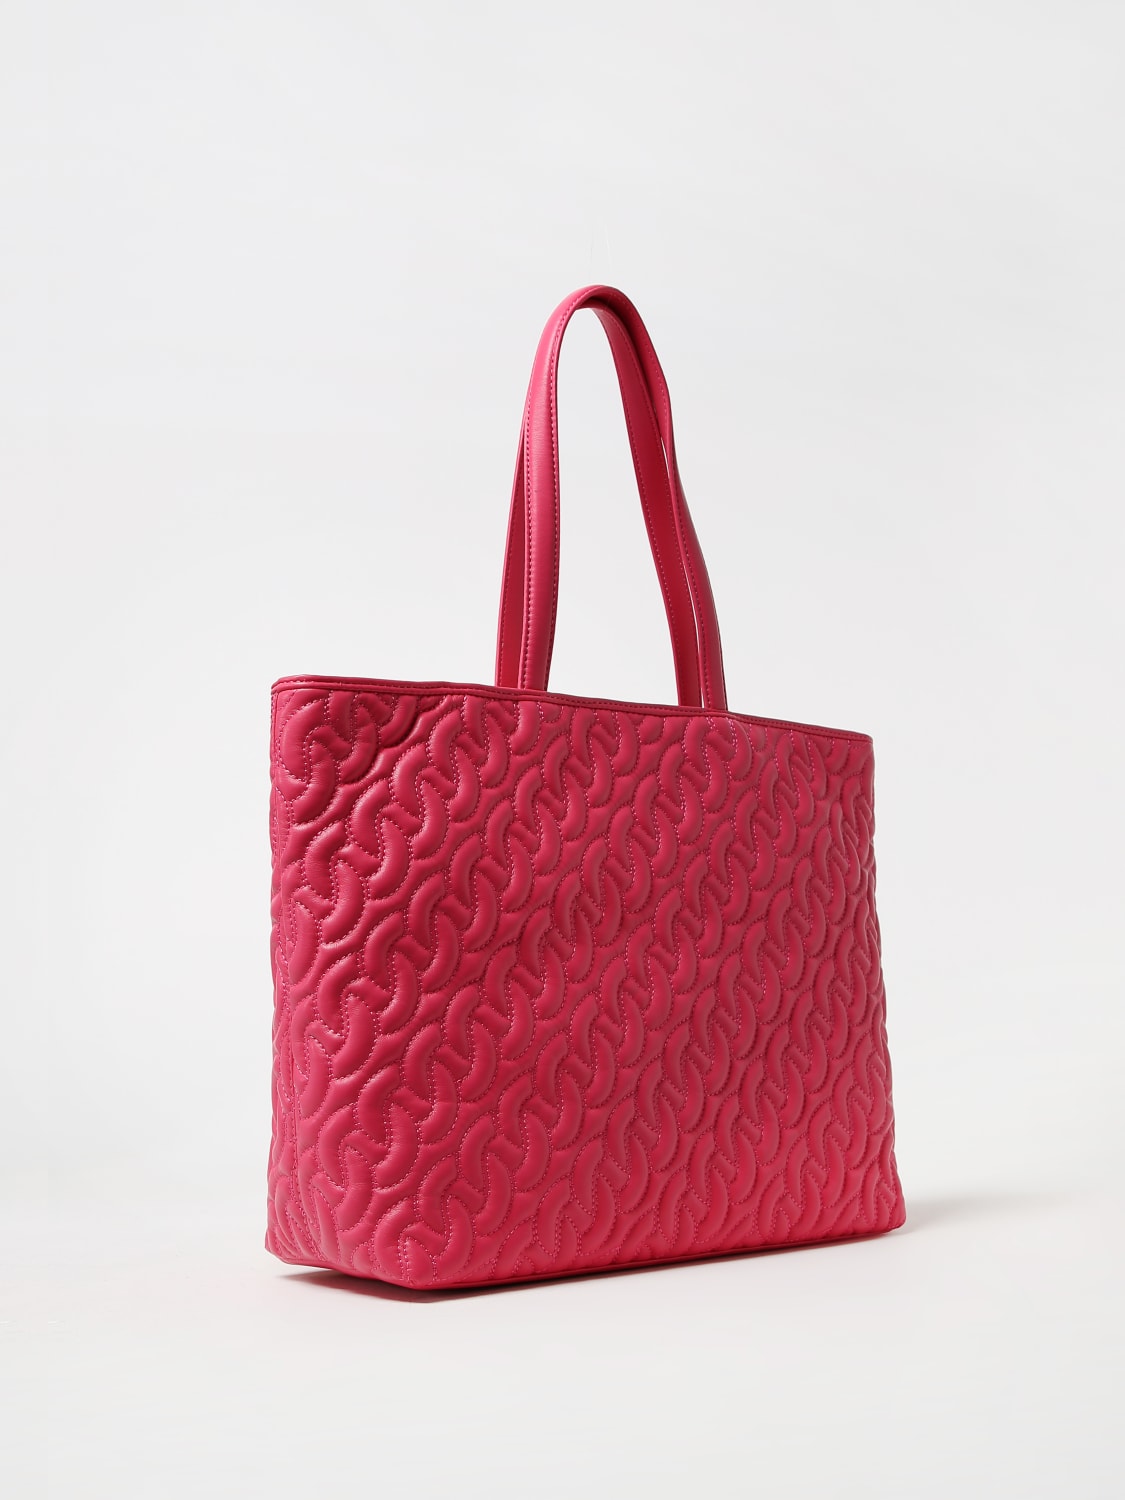 Versace, Bags, Red Bag